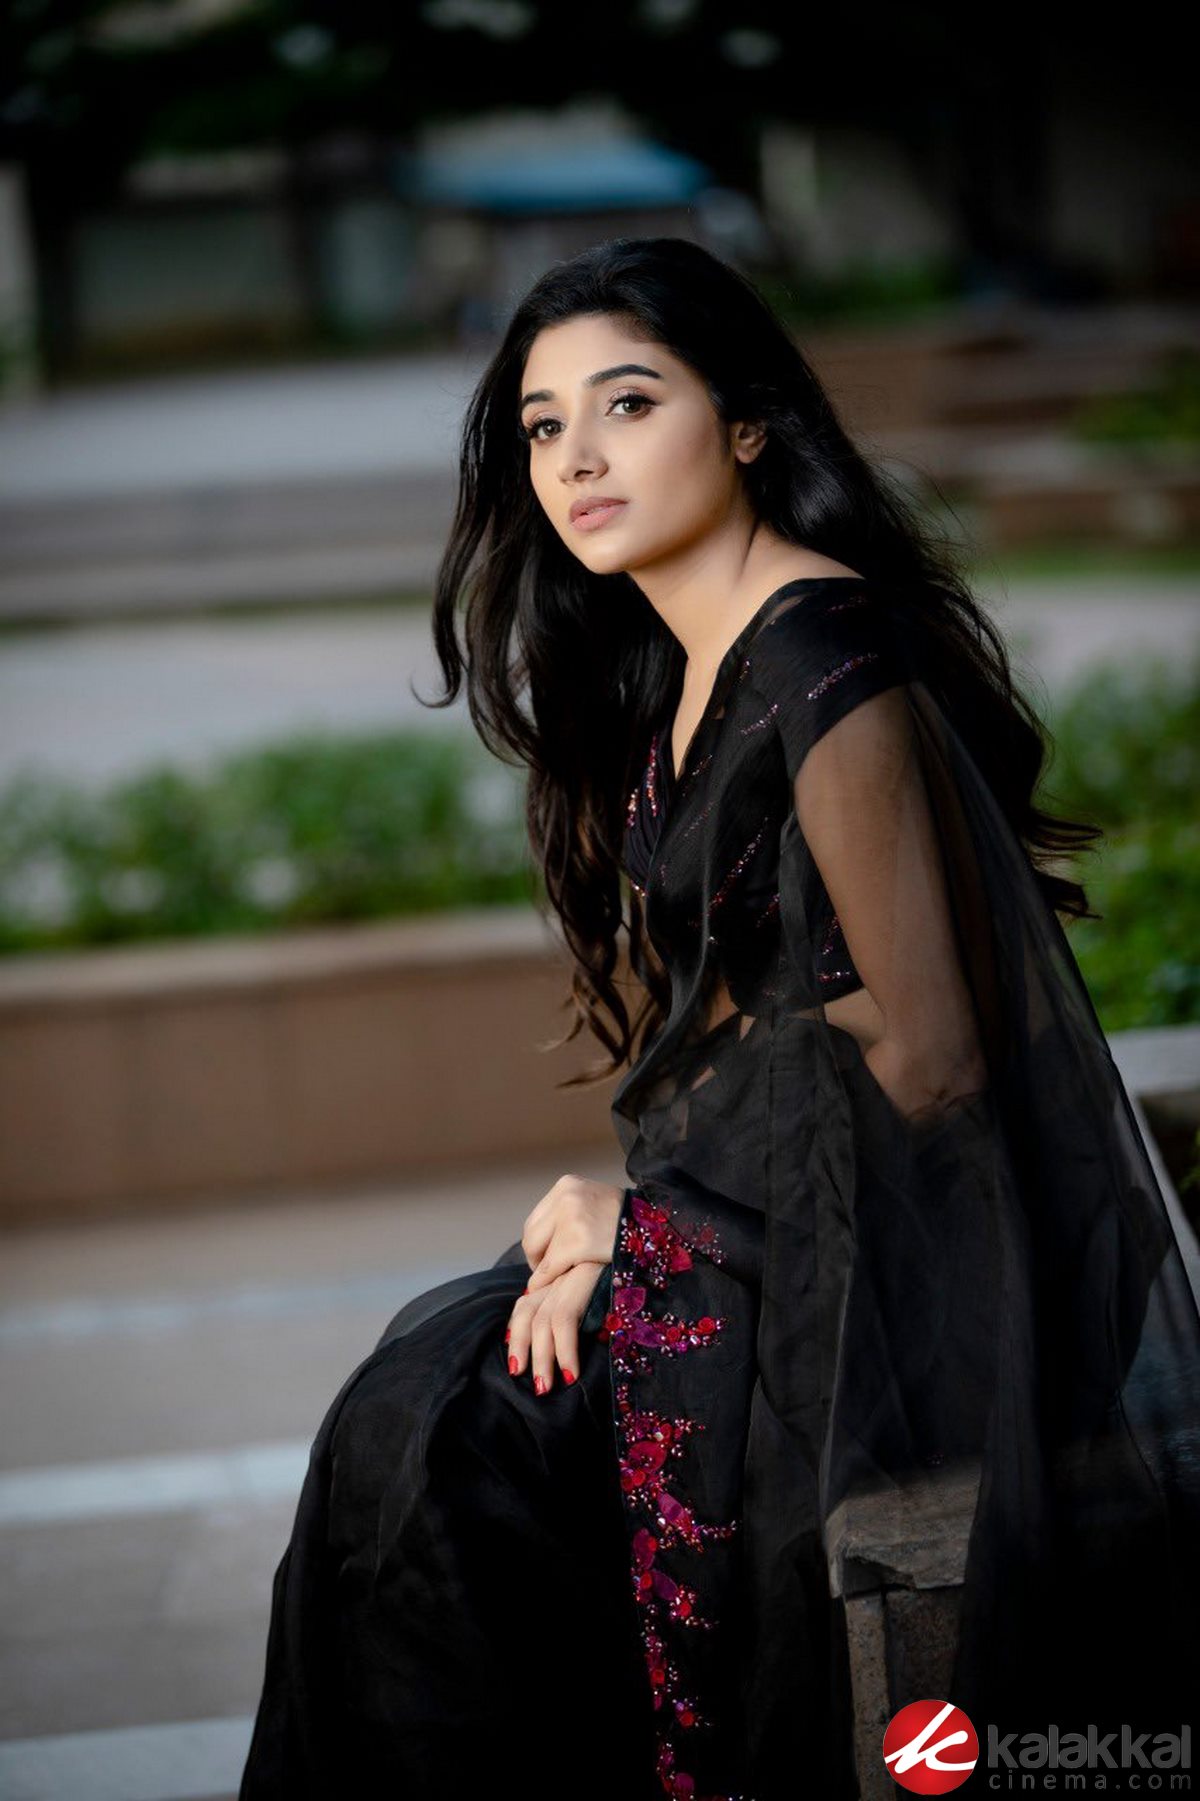 Beauty Queen Actress Mirnaa Latest Photos